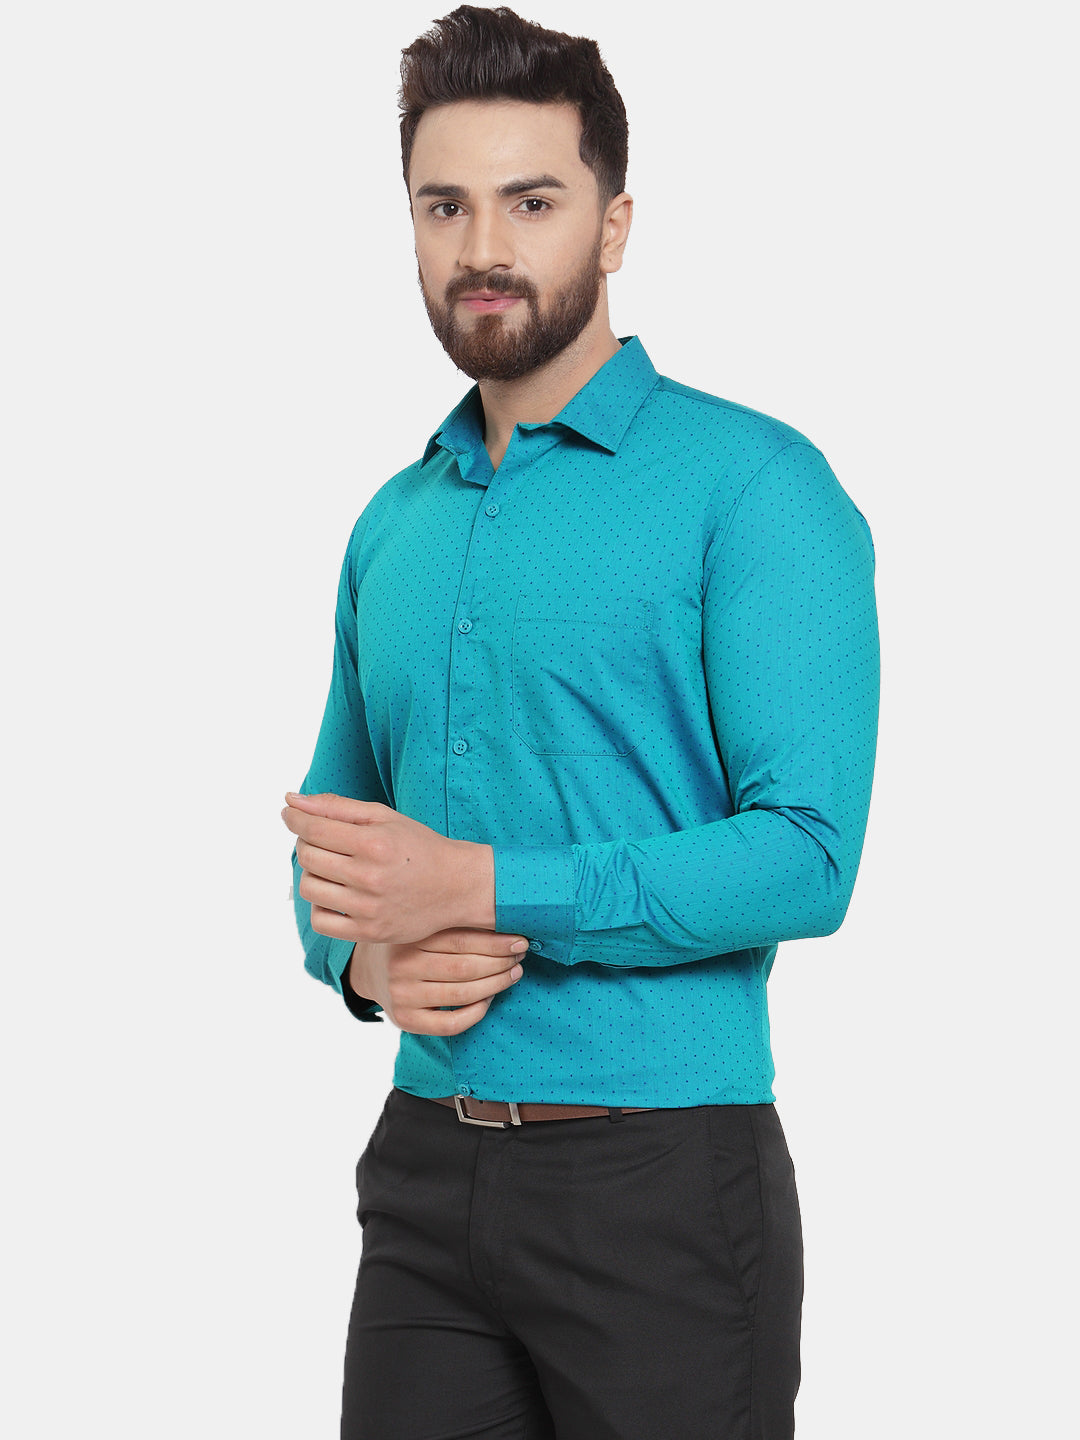 Men's Green Cotton Polka Dots Formal Shirts ( SF 739Green ) - Jainish